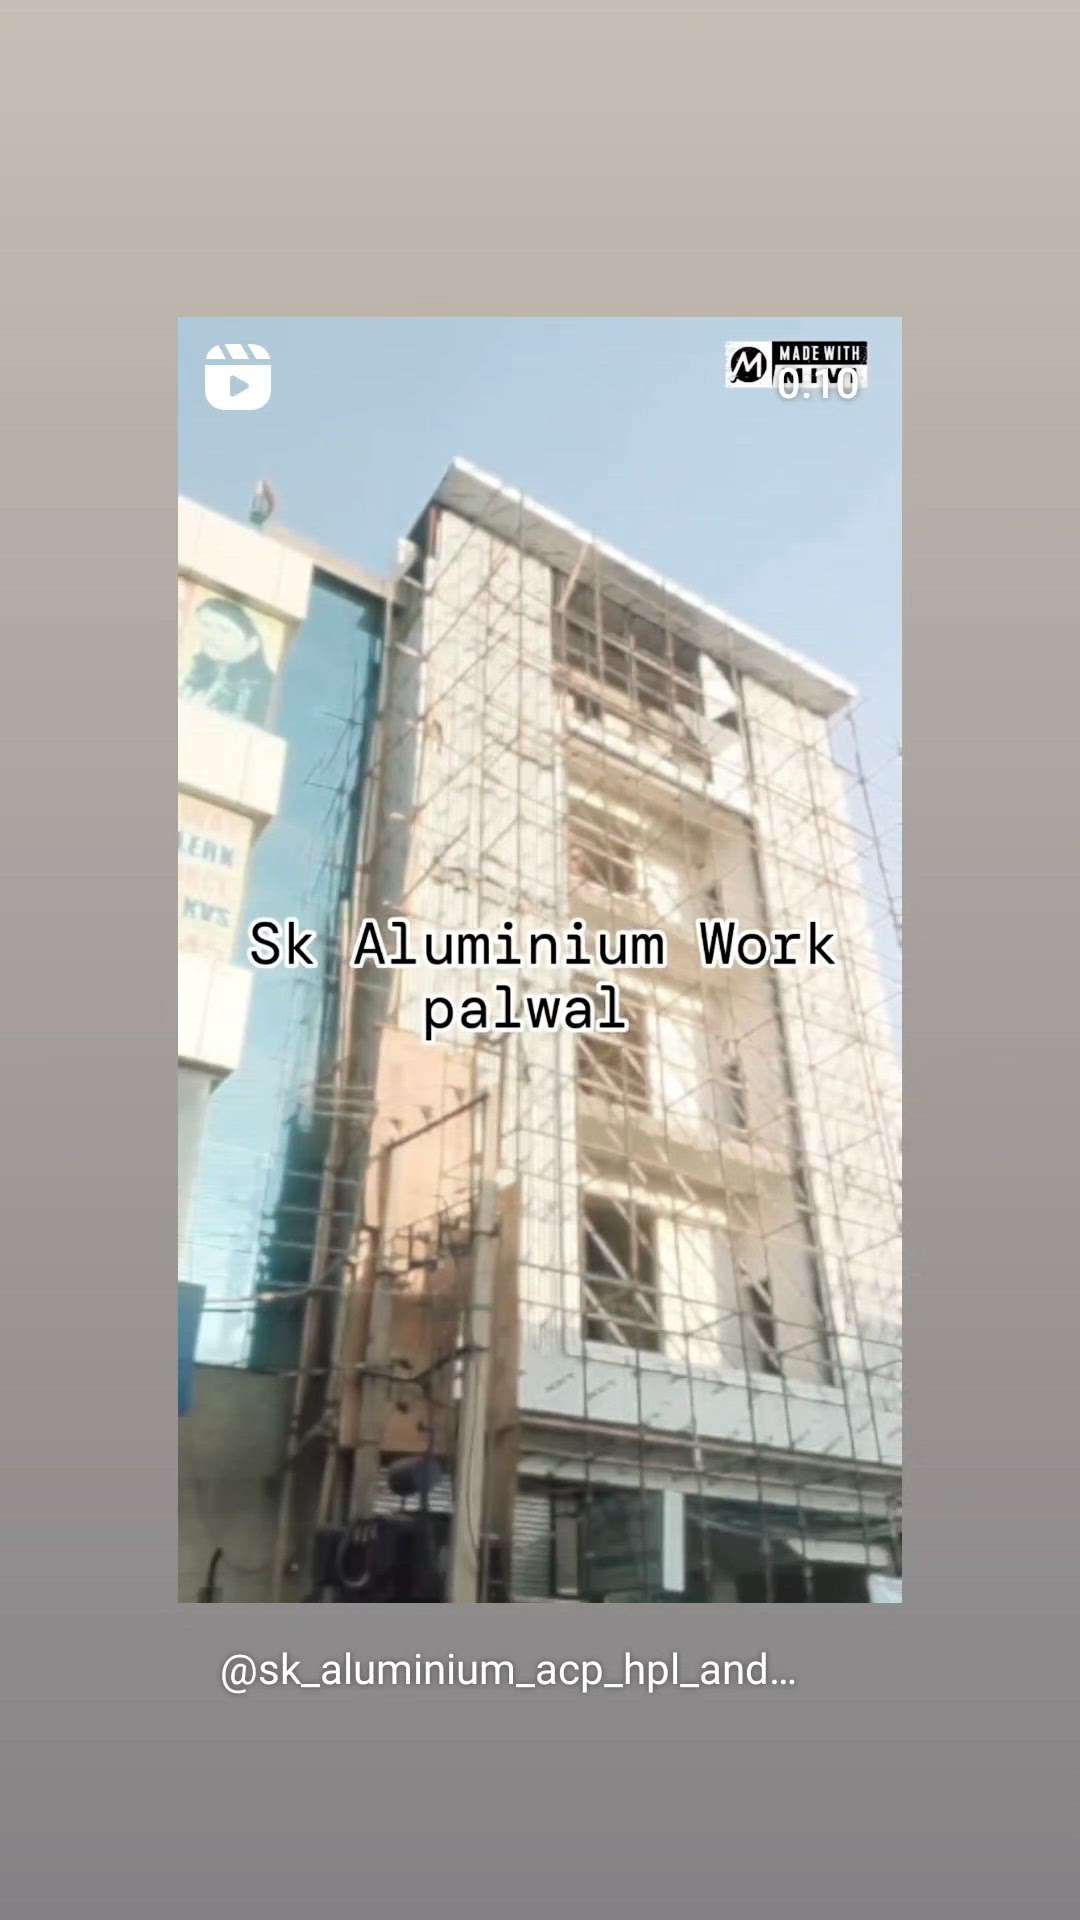 sk Aluminium Work palwal frant elevation